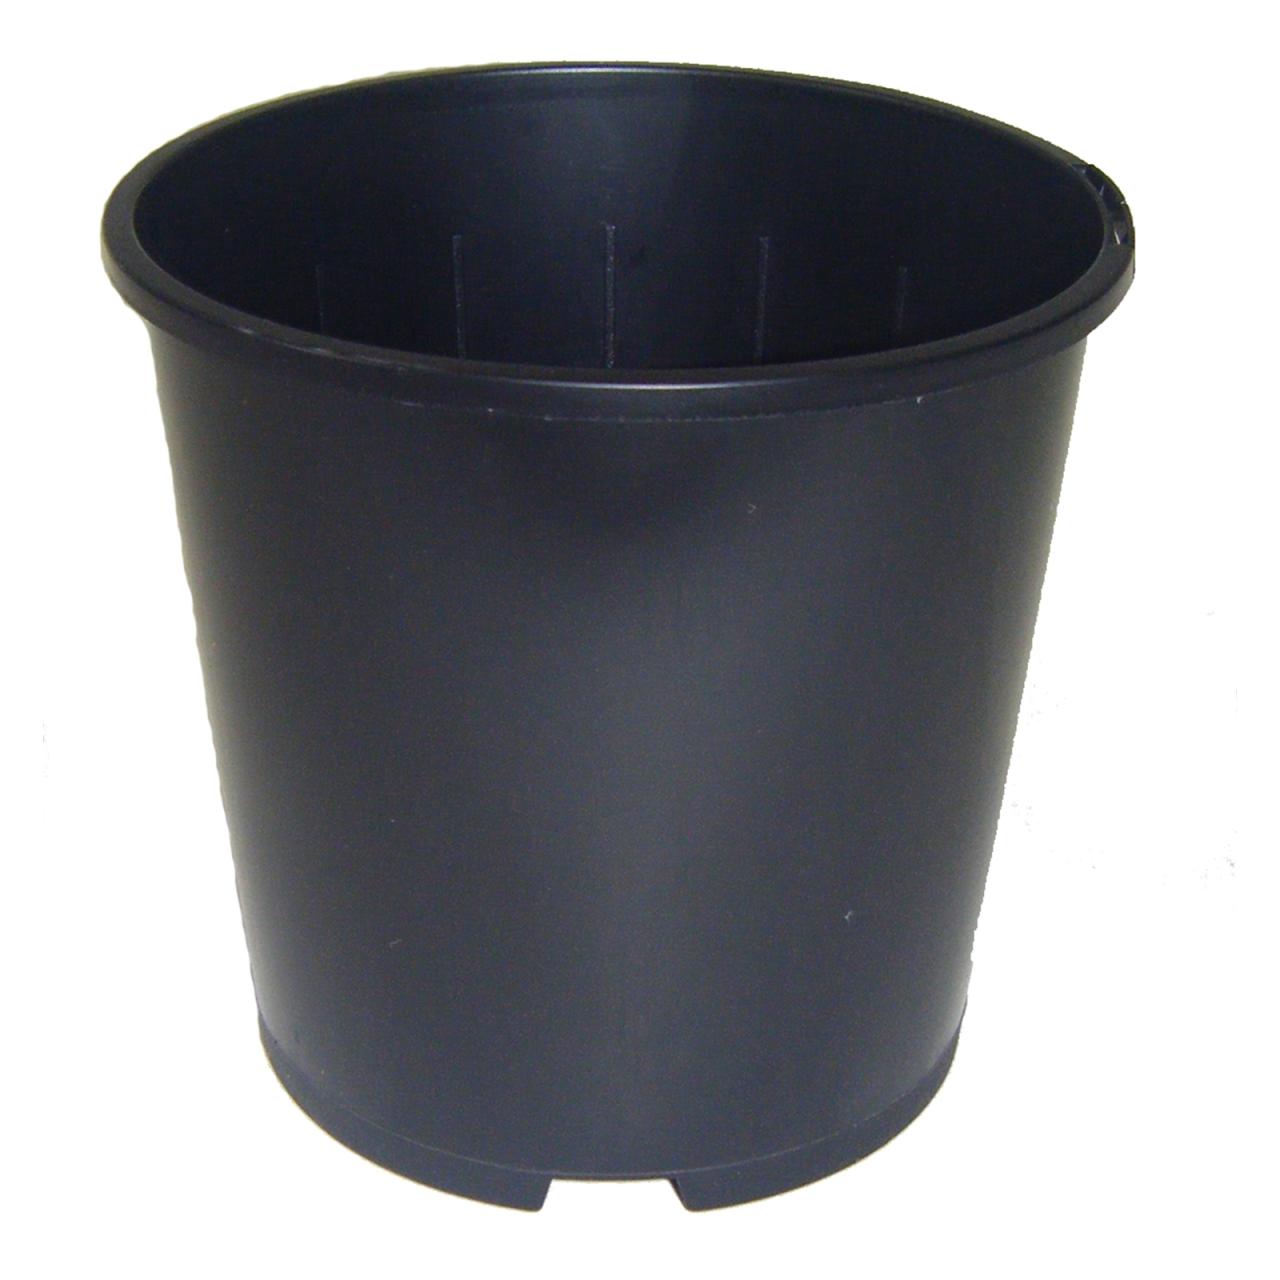 Hanging Plants Indoor | Bunnings Black Plastic Pots: A Versatile and Affordable Gardening Solution